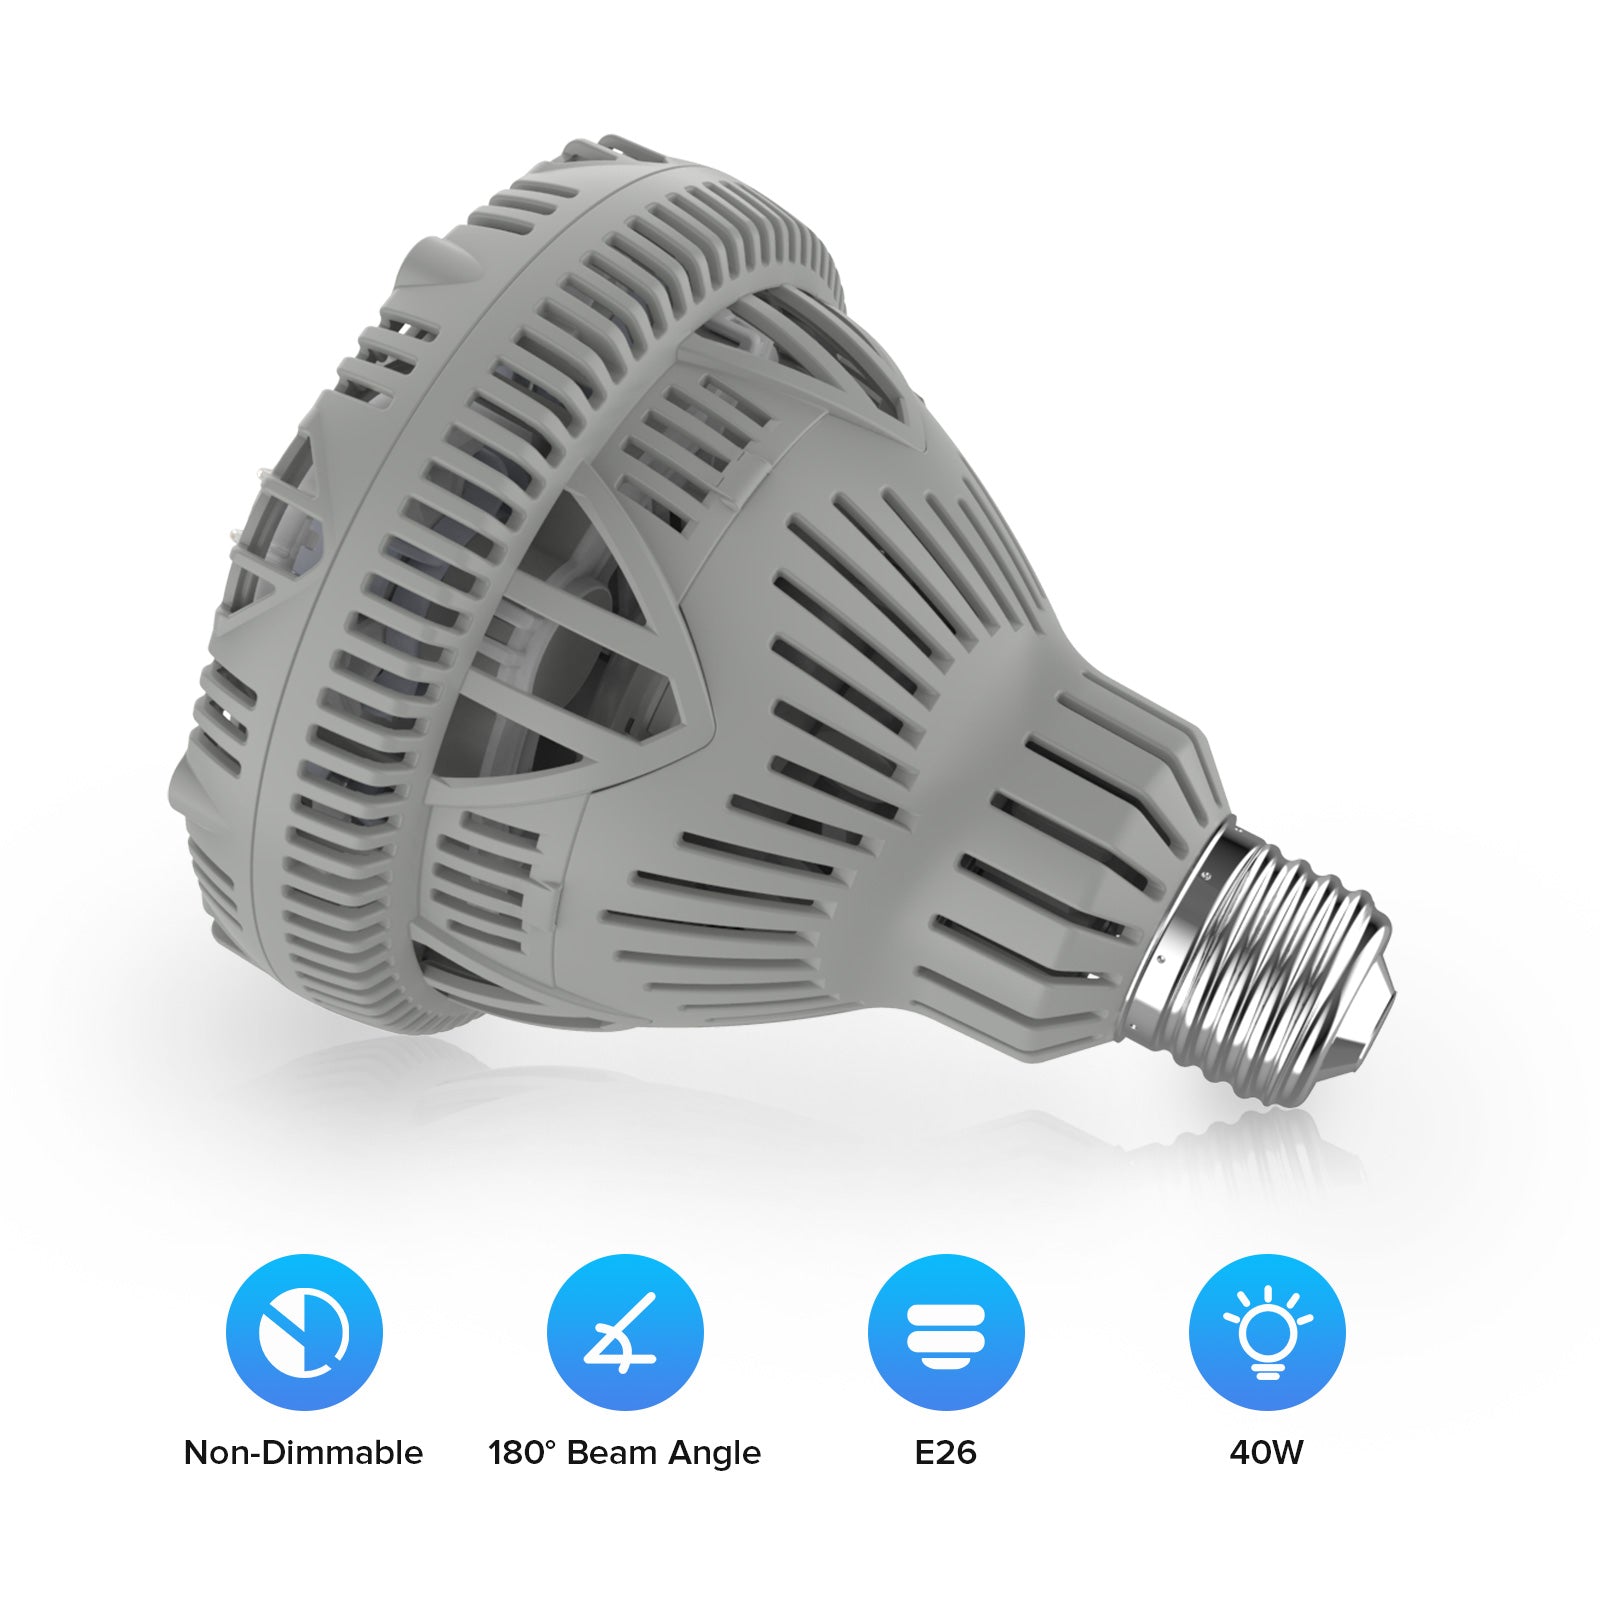 SG BR30 40W Warehouse Led Light Bulb,Non-Dimmable,180°Beam Angle,E26 socket,40W.